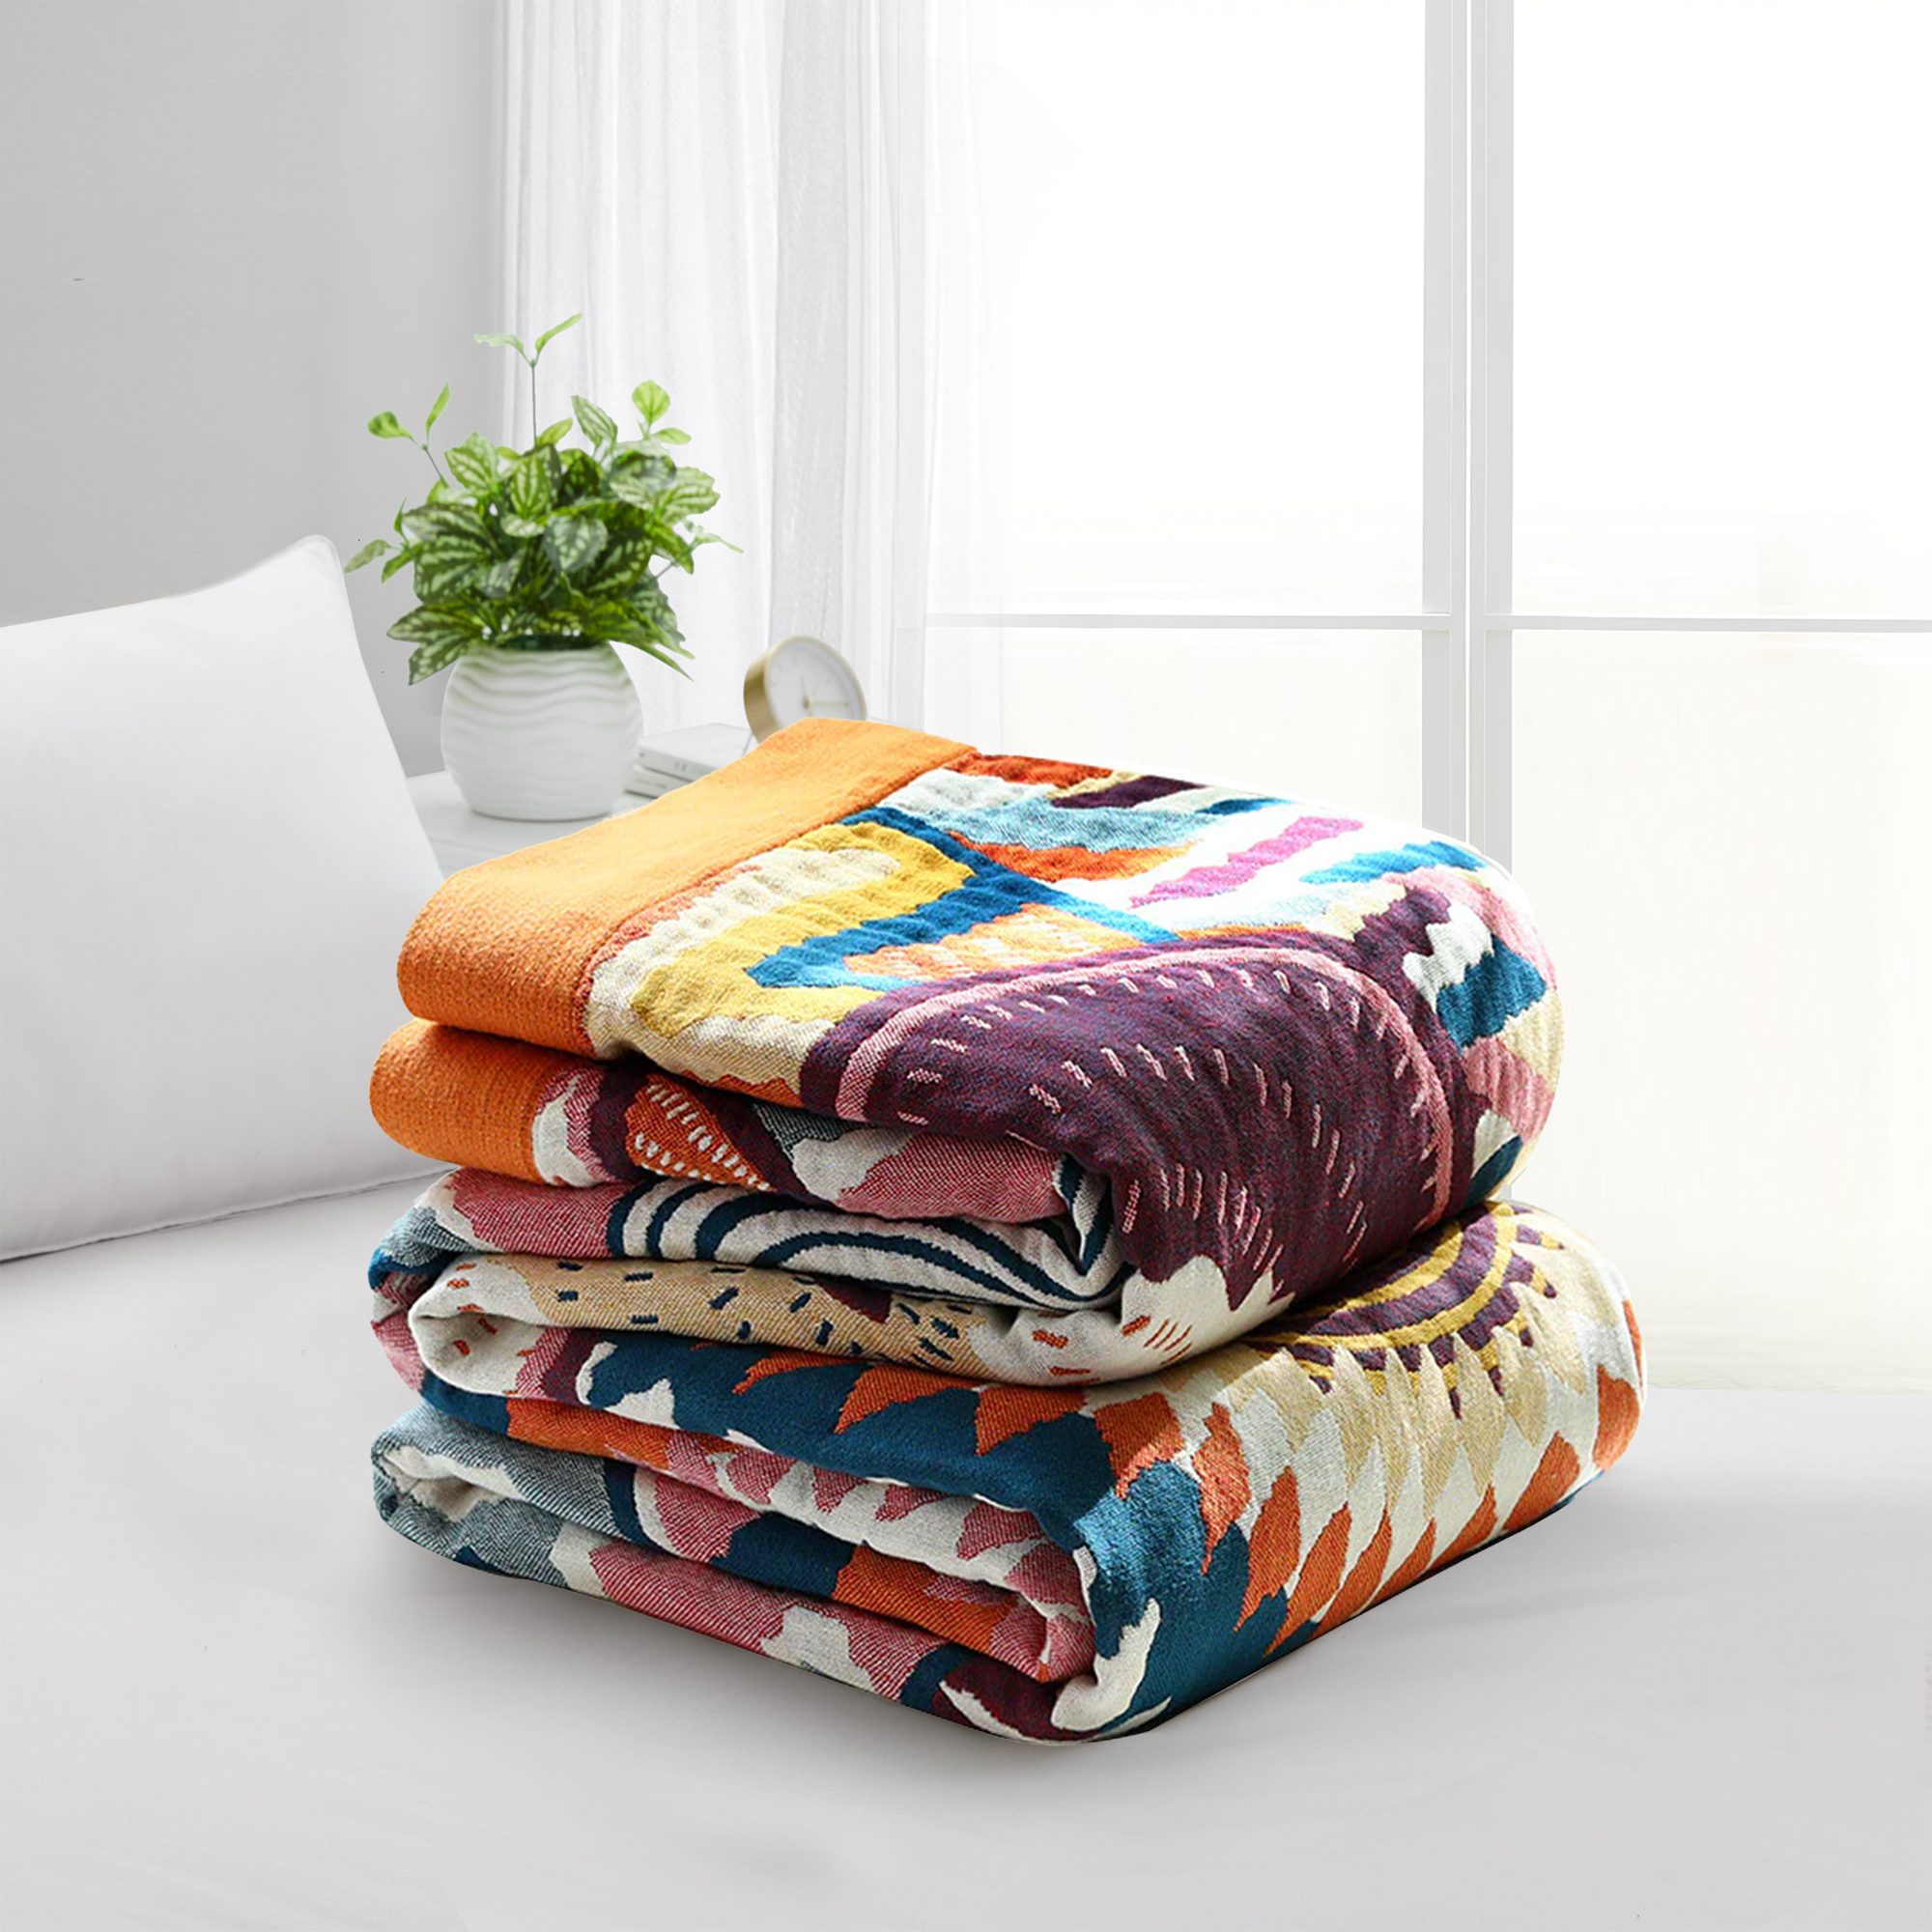 Paisley Muslin All Season Cotton Blanket, Lightweight Throw Blanket For Bedroom Living Room Decor 60x80